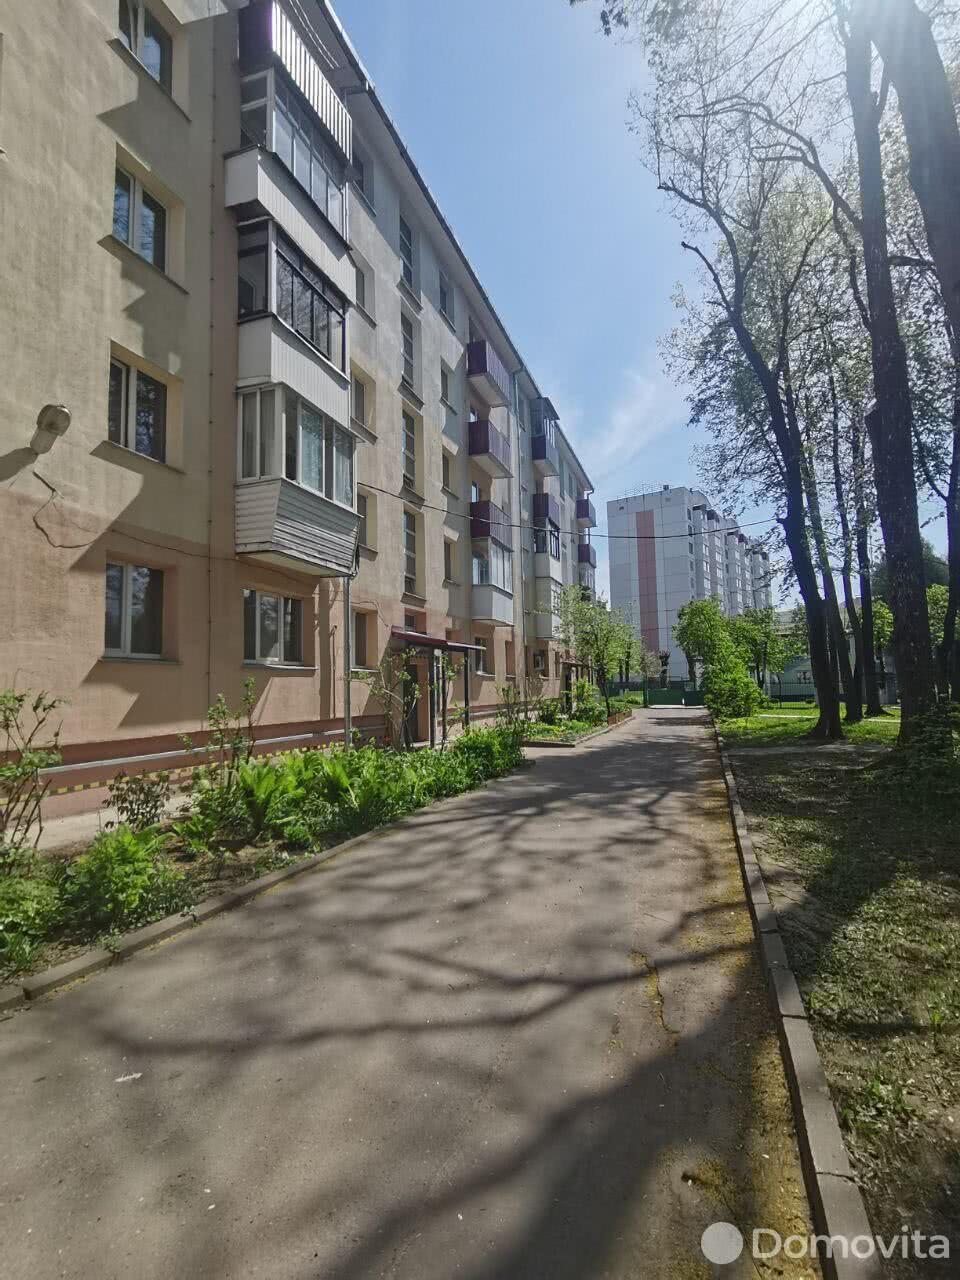 квартира, Витебск, пр-т Фрунзе, д. 55, стоимость продажи 117 395 р.